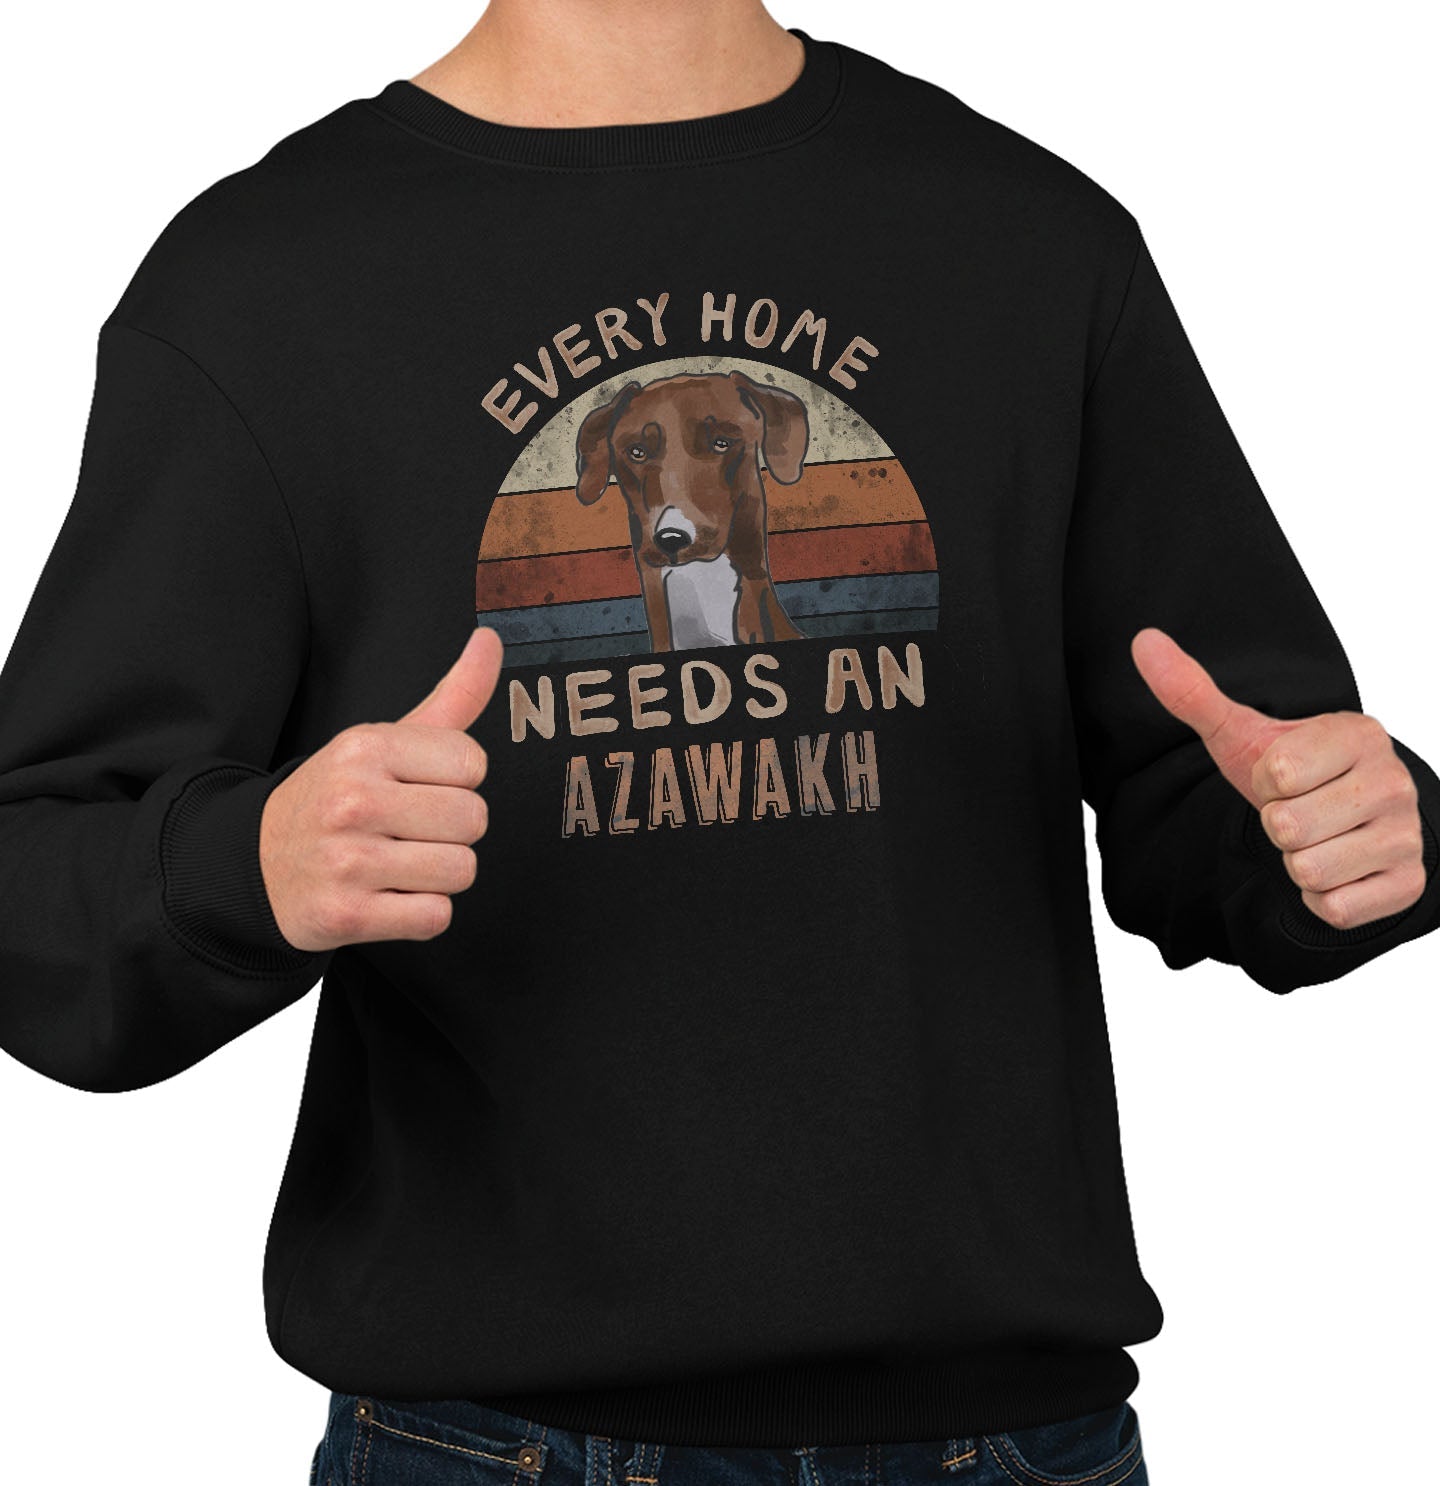 Every Home Needs a Azawakh - Adult Unisex Crewneck Sweatshirt